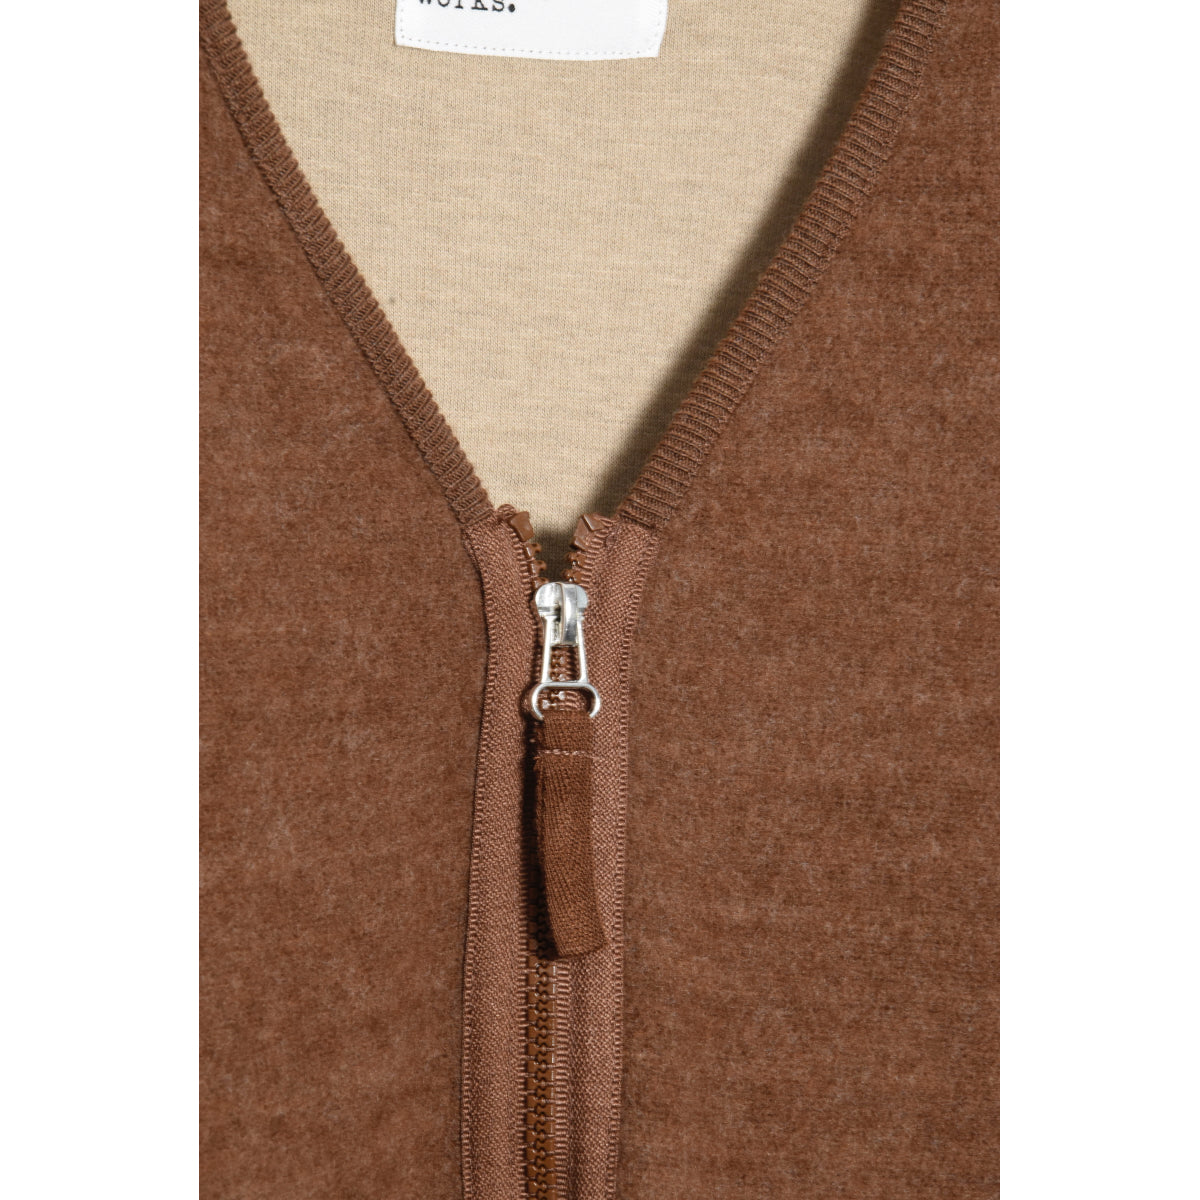 Universal Works Zip Liner Jacket 29608 Soft Wool Cot Knit brown